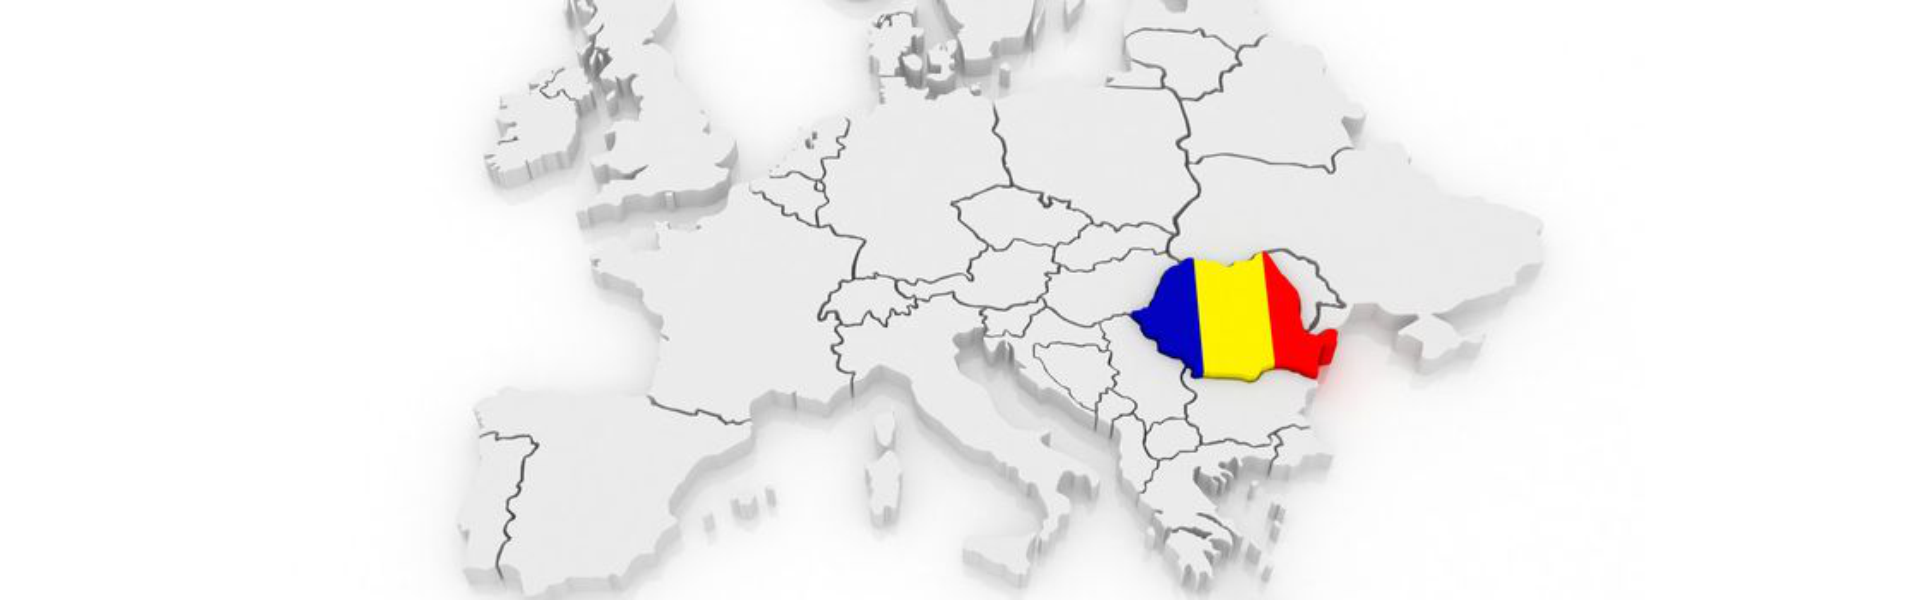 Romania Schengen Negociere